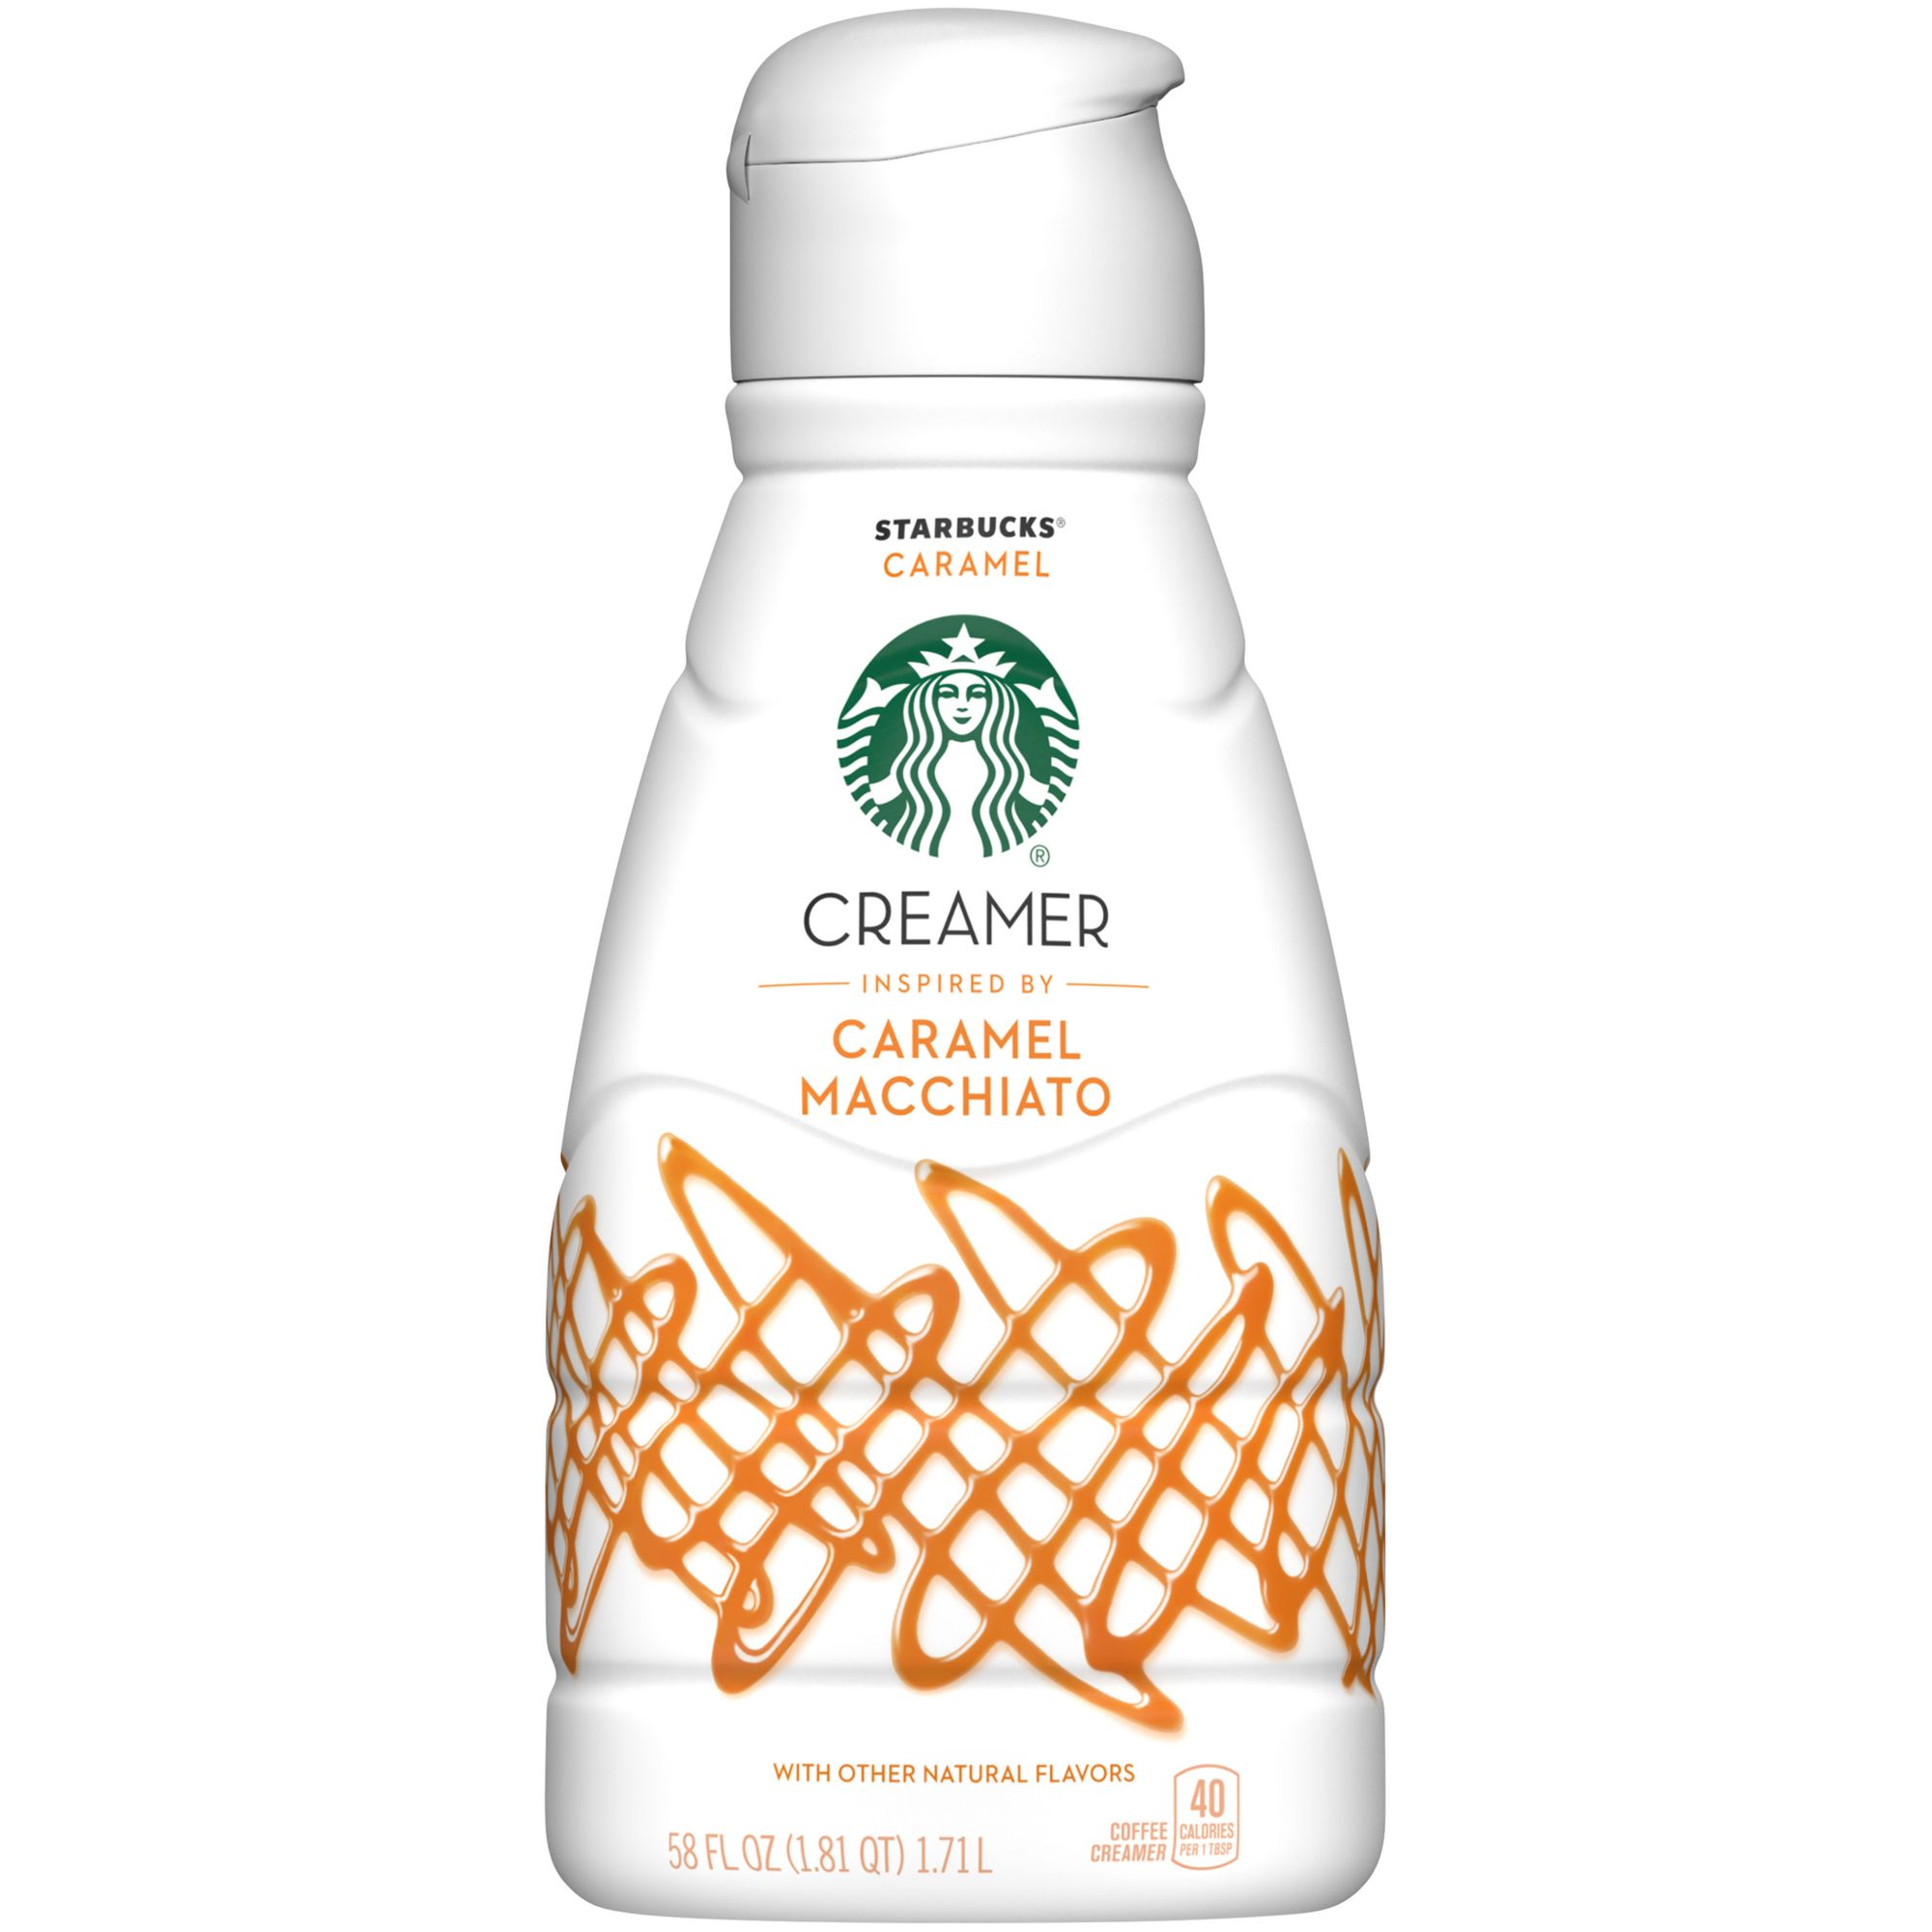 Starbucks Caramel Flavored Liquid Coffee Creamer, 58 fl. oz.